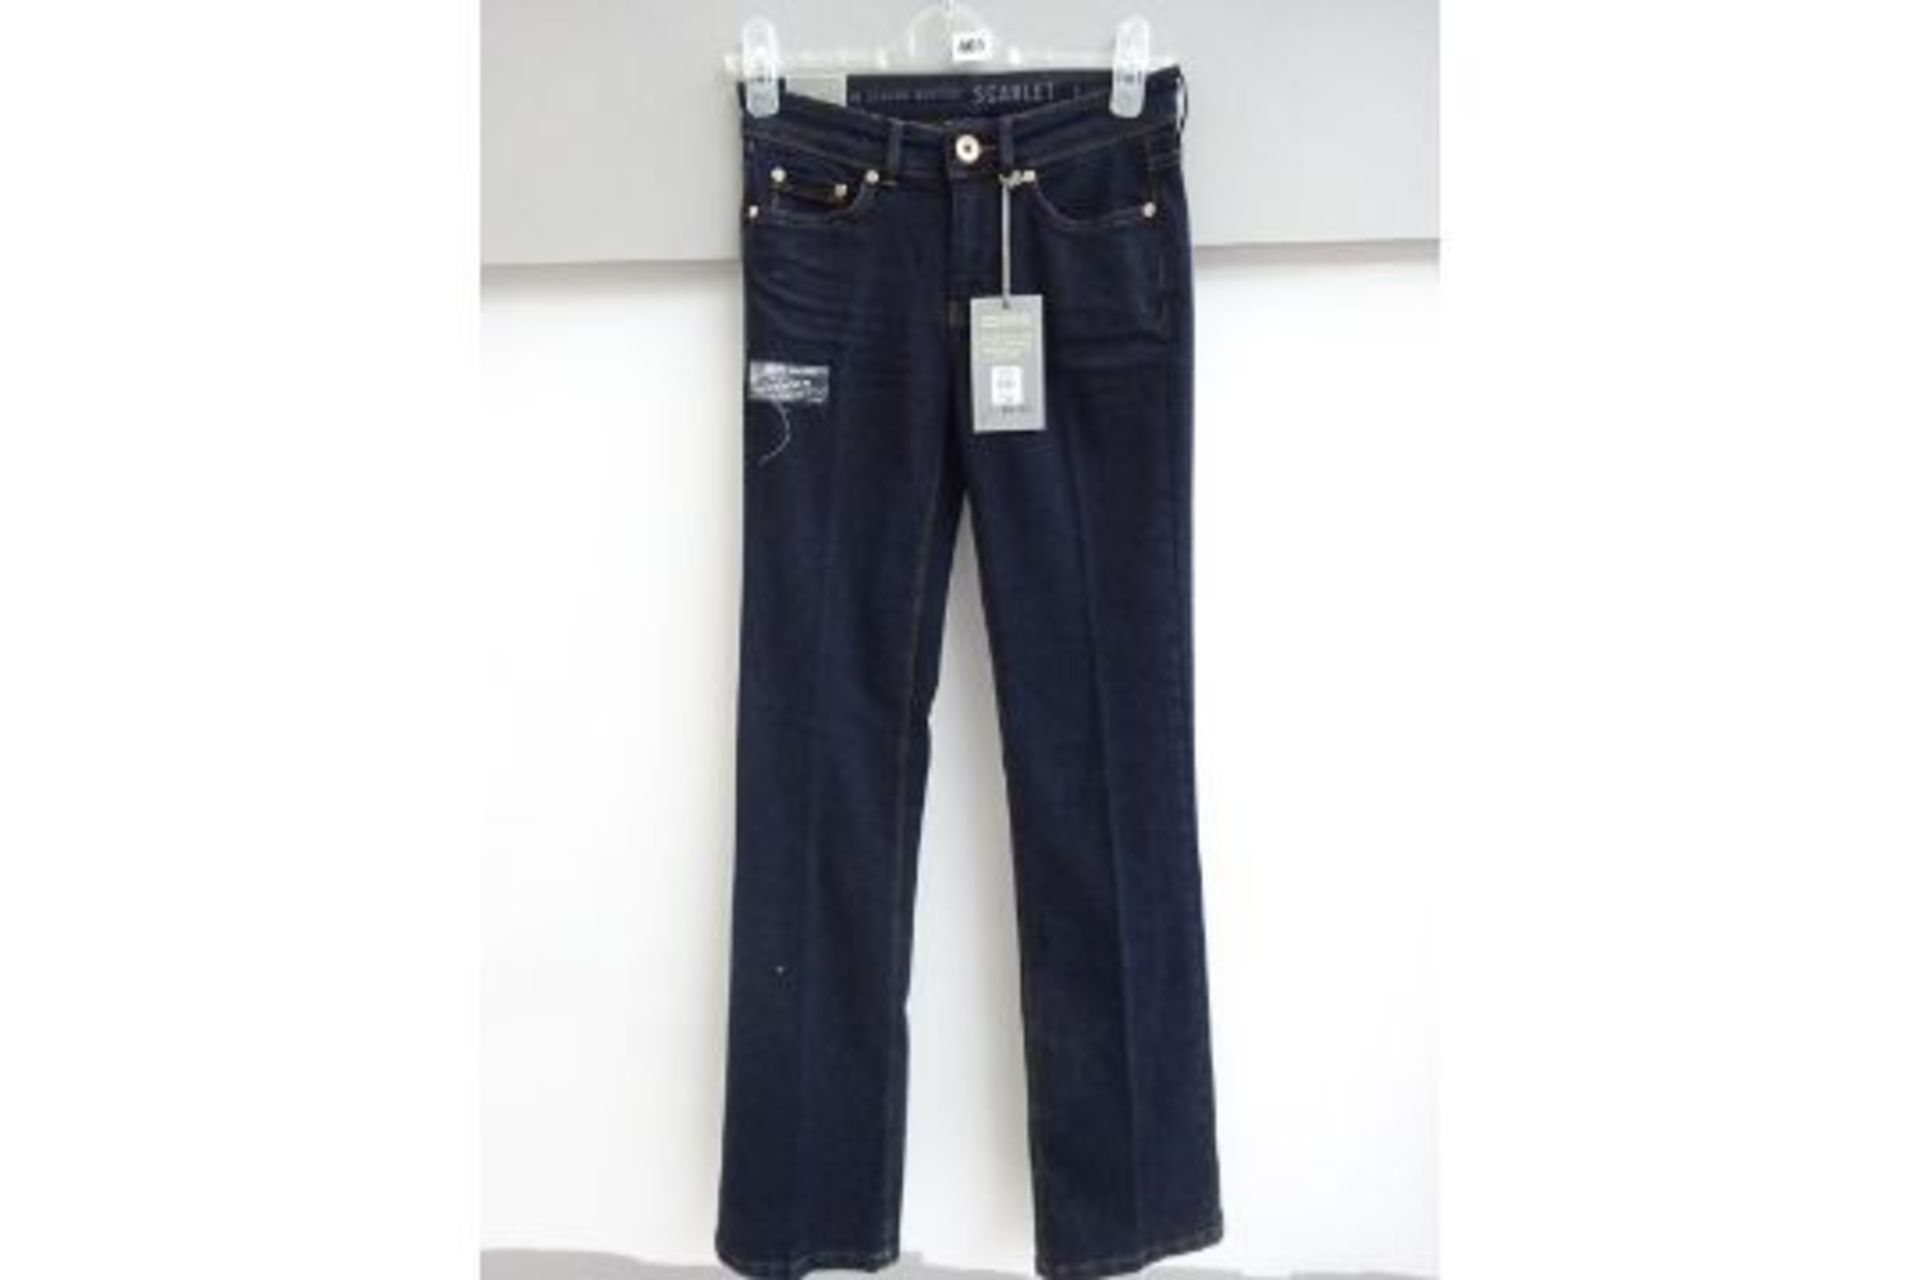 Oasis Bootcut Jeans Size 8L/32L - RRP £45